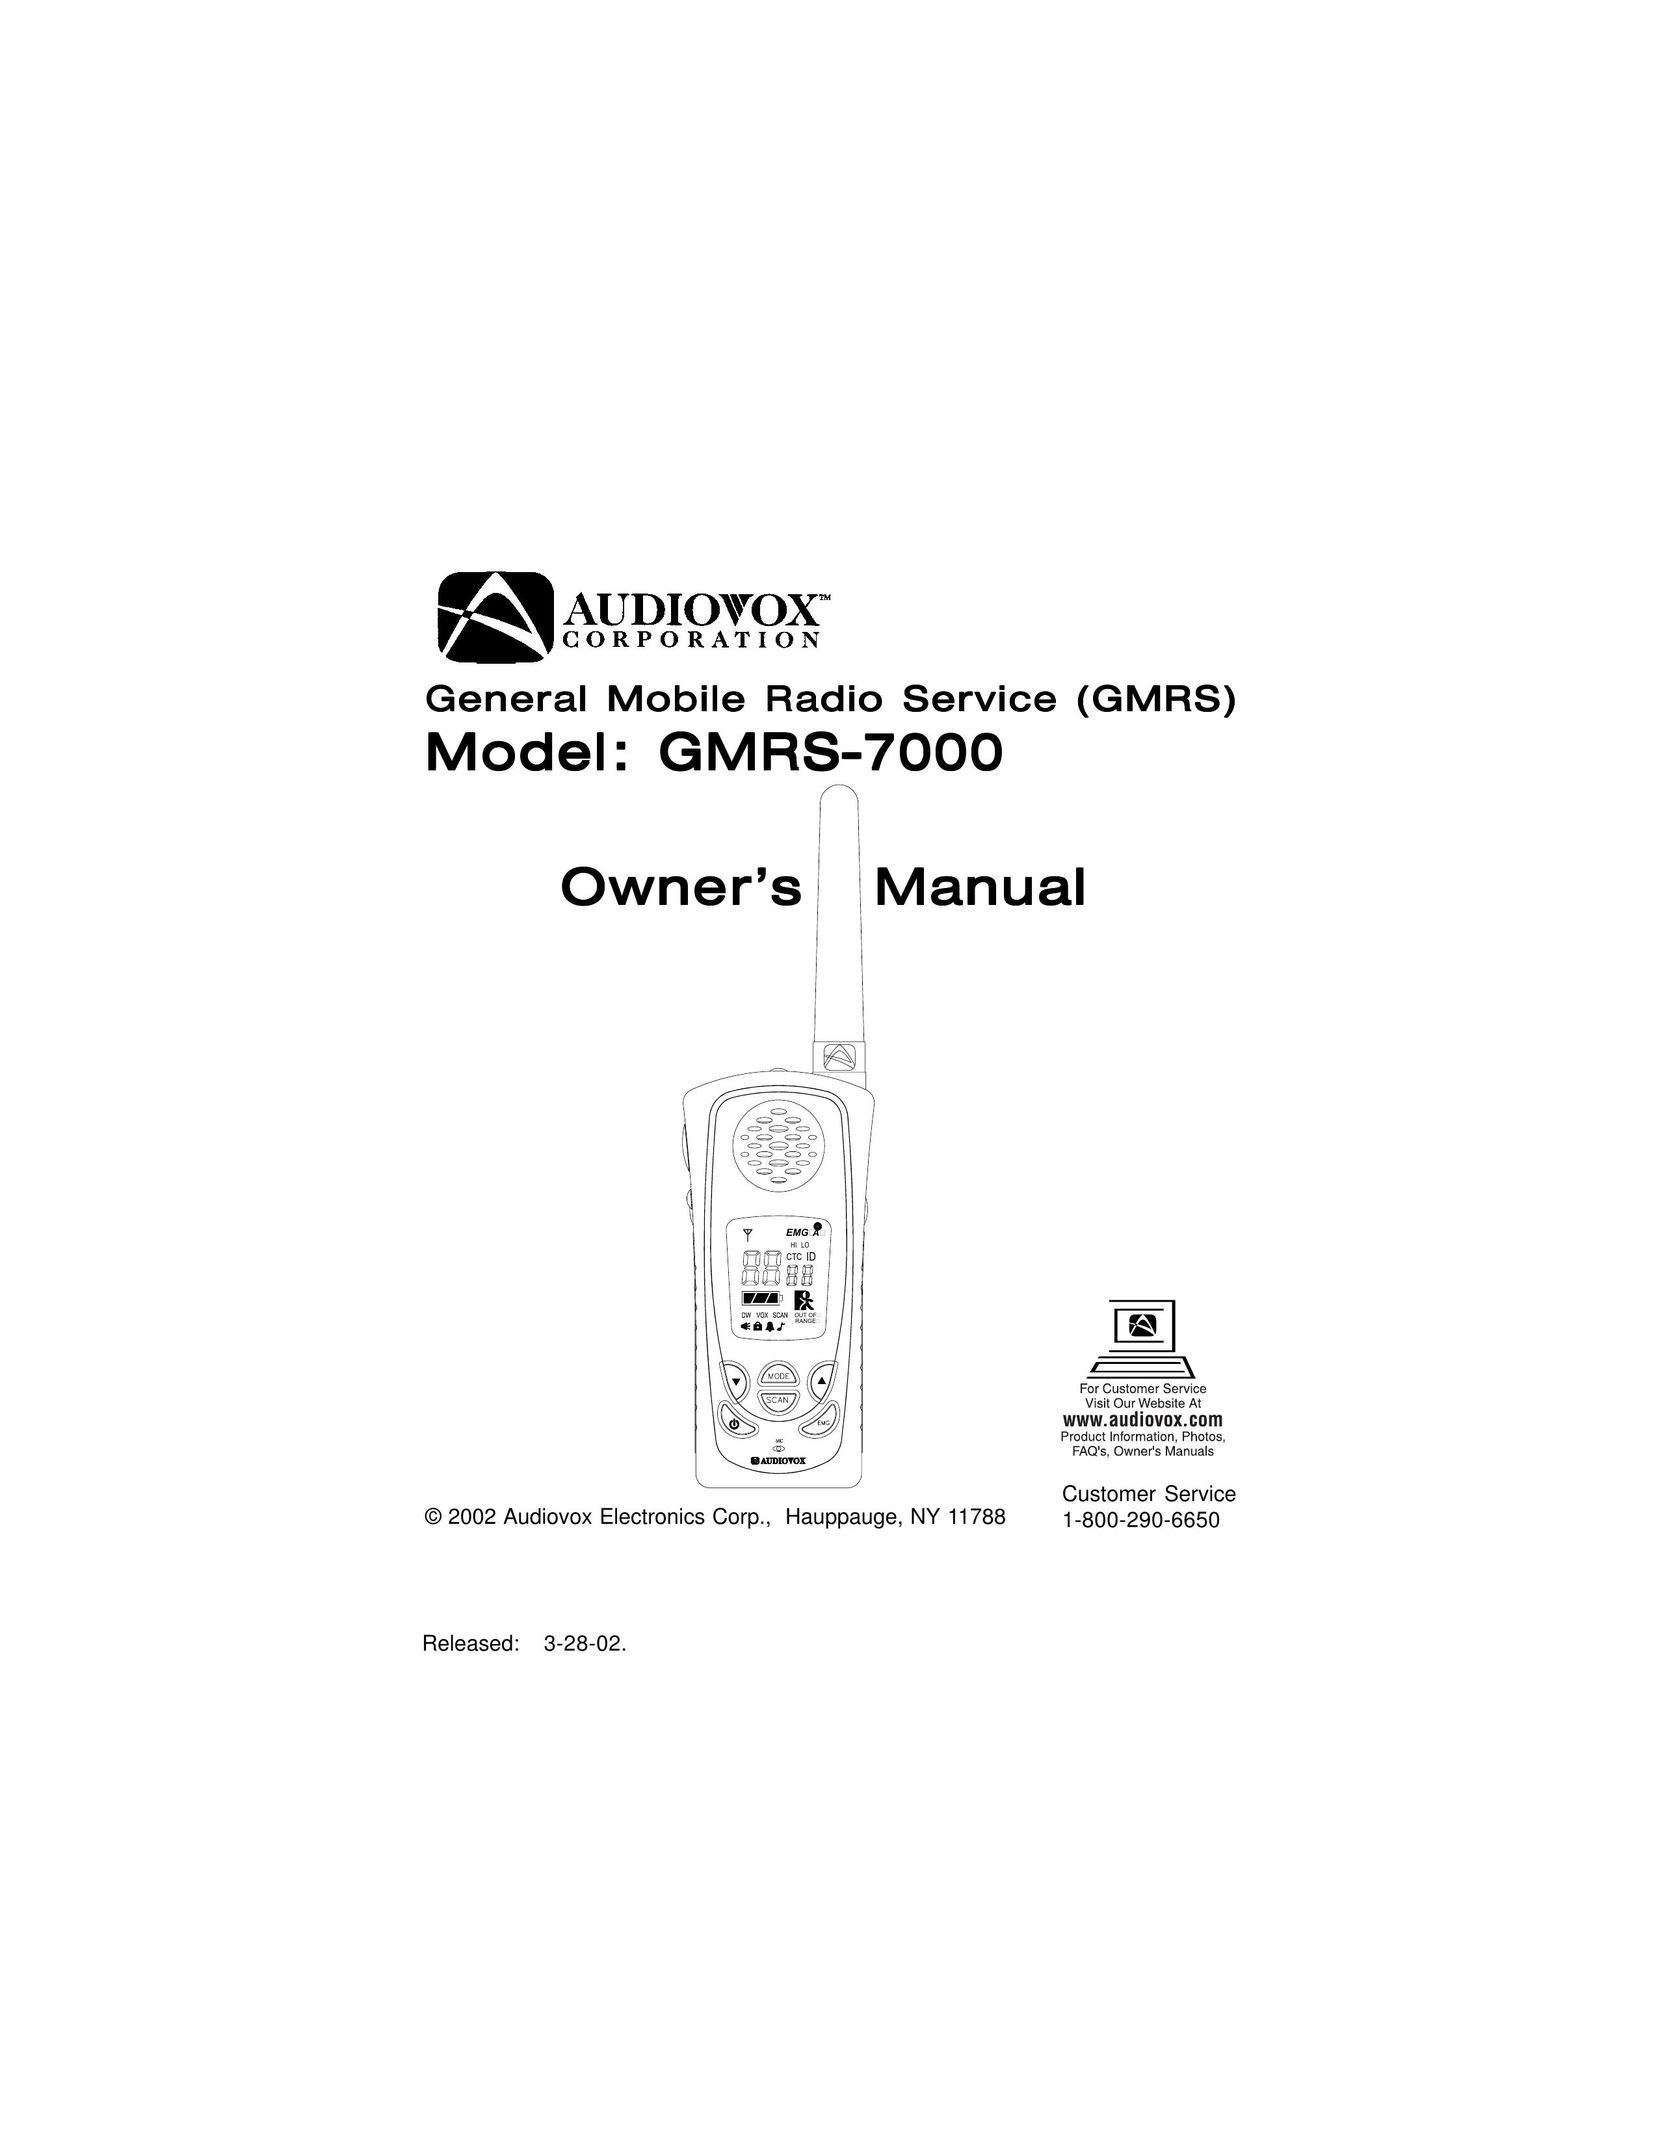 Audiovox GMRS-7000 Two-Way Radio User Manual